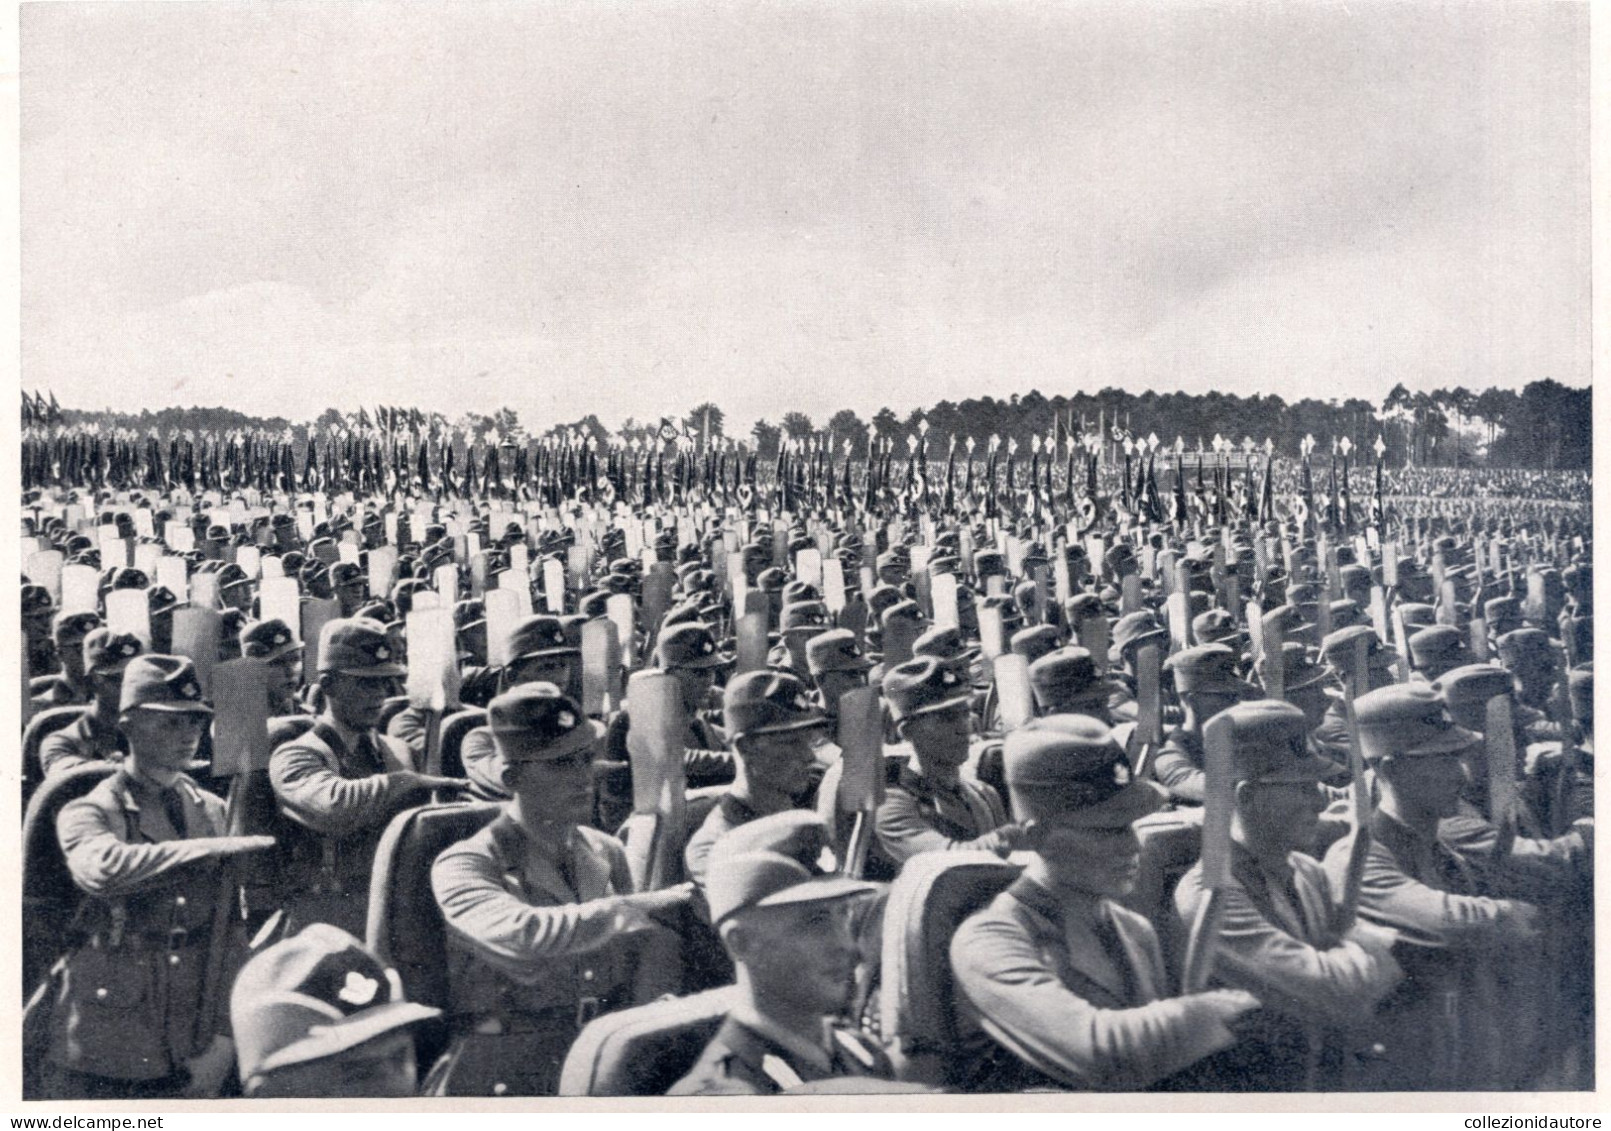 SAMMELWERK N 15 ADOLF HITLER CIGARETTEN SERIE COMPLETA DI 25 FOTOGRAFIE ORIGINALI MISURE 12X17 CM ERA NAZISTA 1922-1945